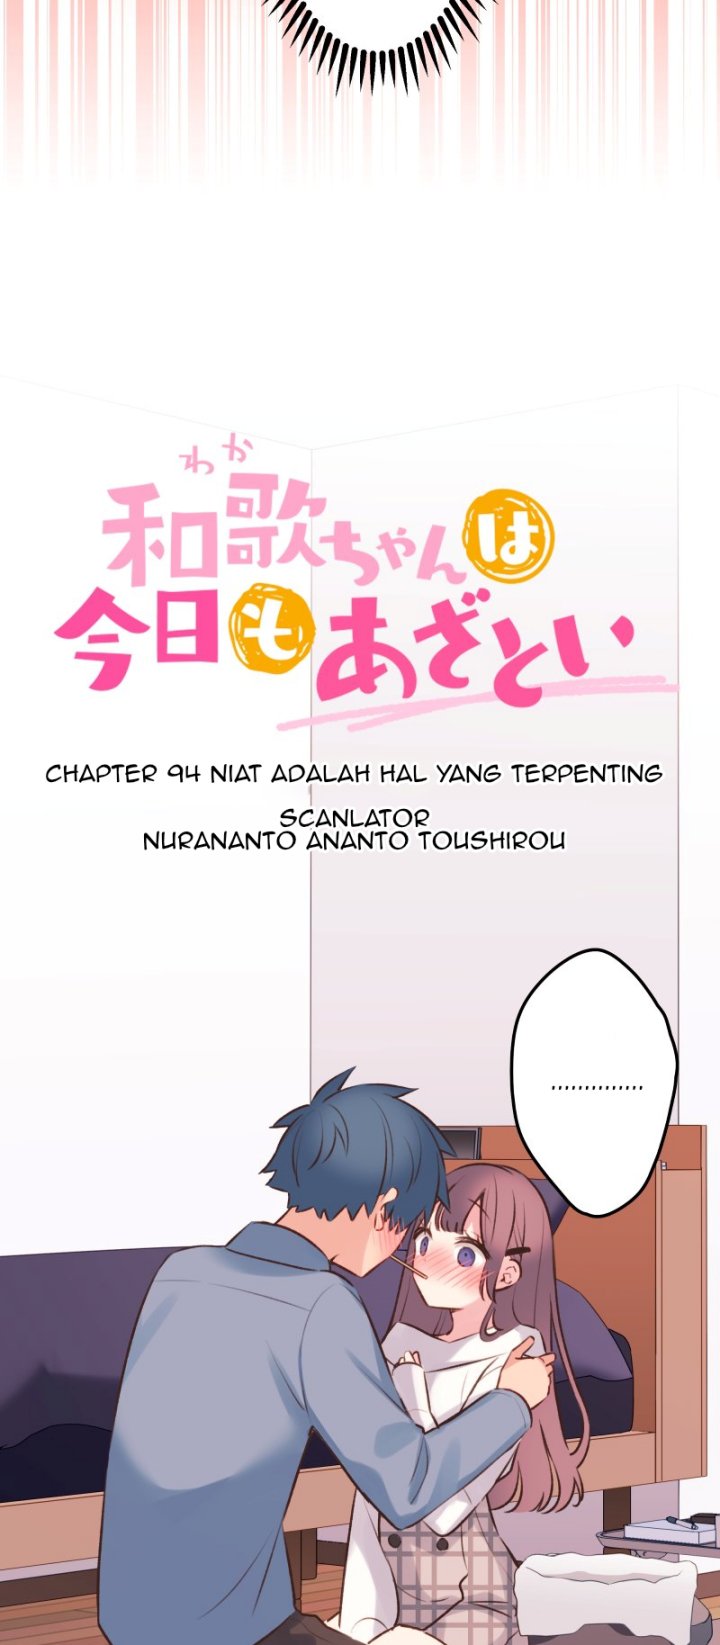 Waka-chan Is Flirty Again Chapter 94